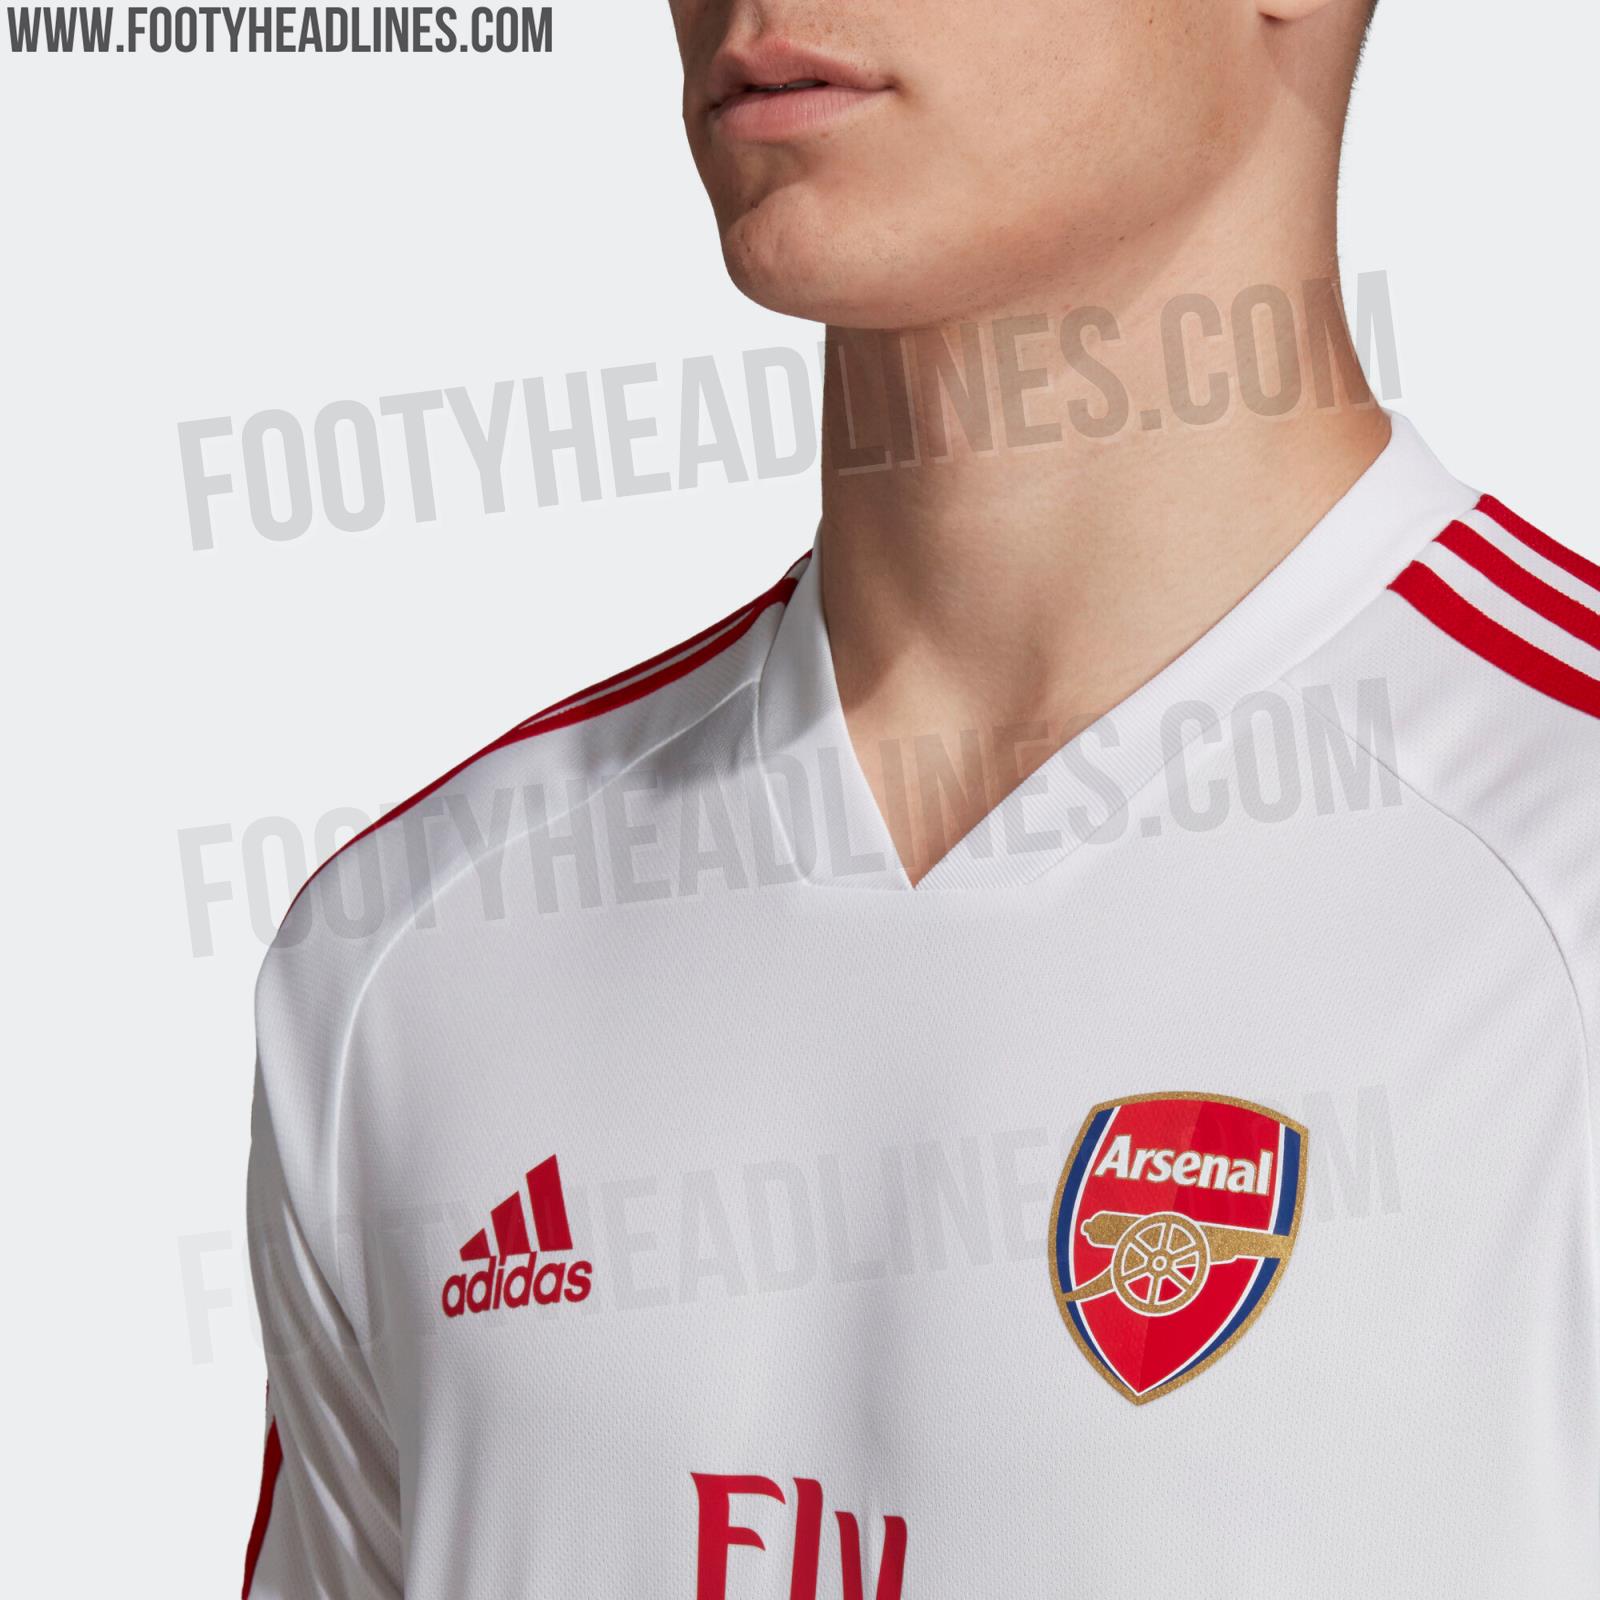 Adidas Arsenal 19-20 Home & Away Kits - Footy Headlines